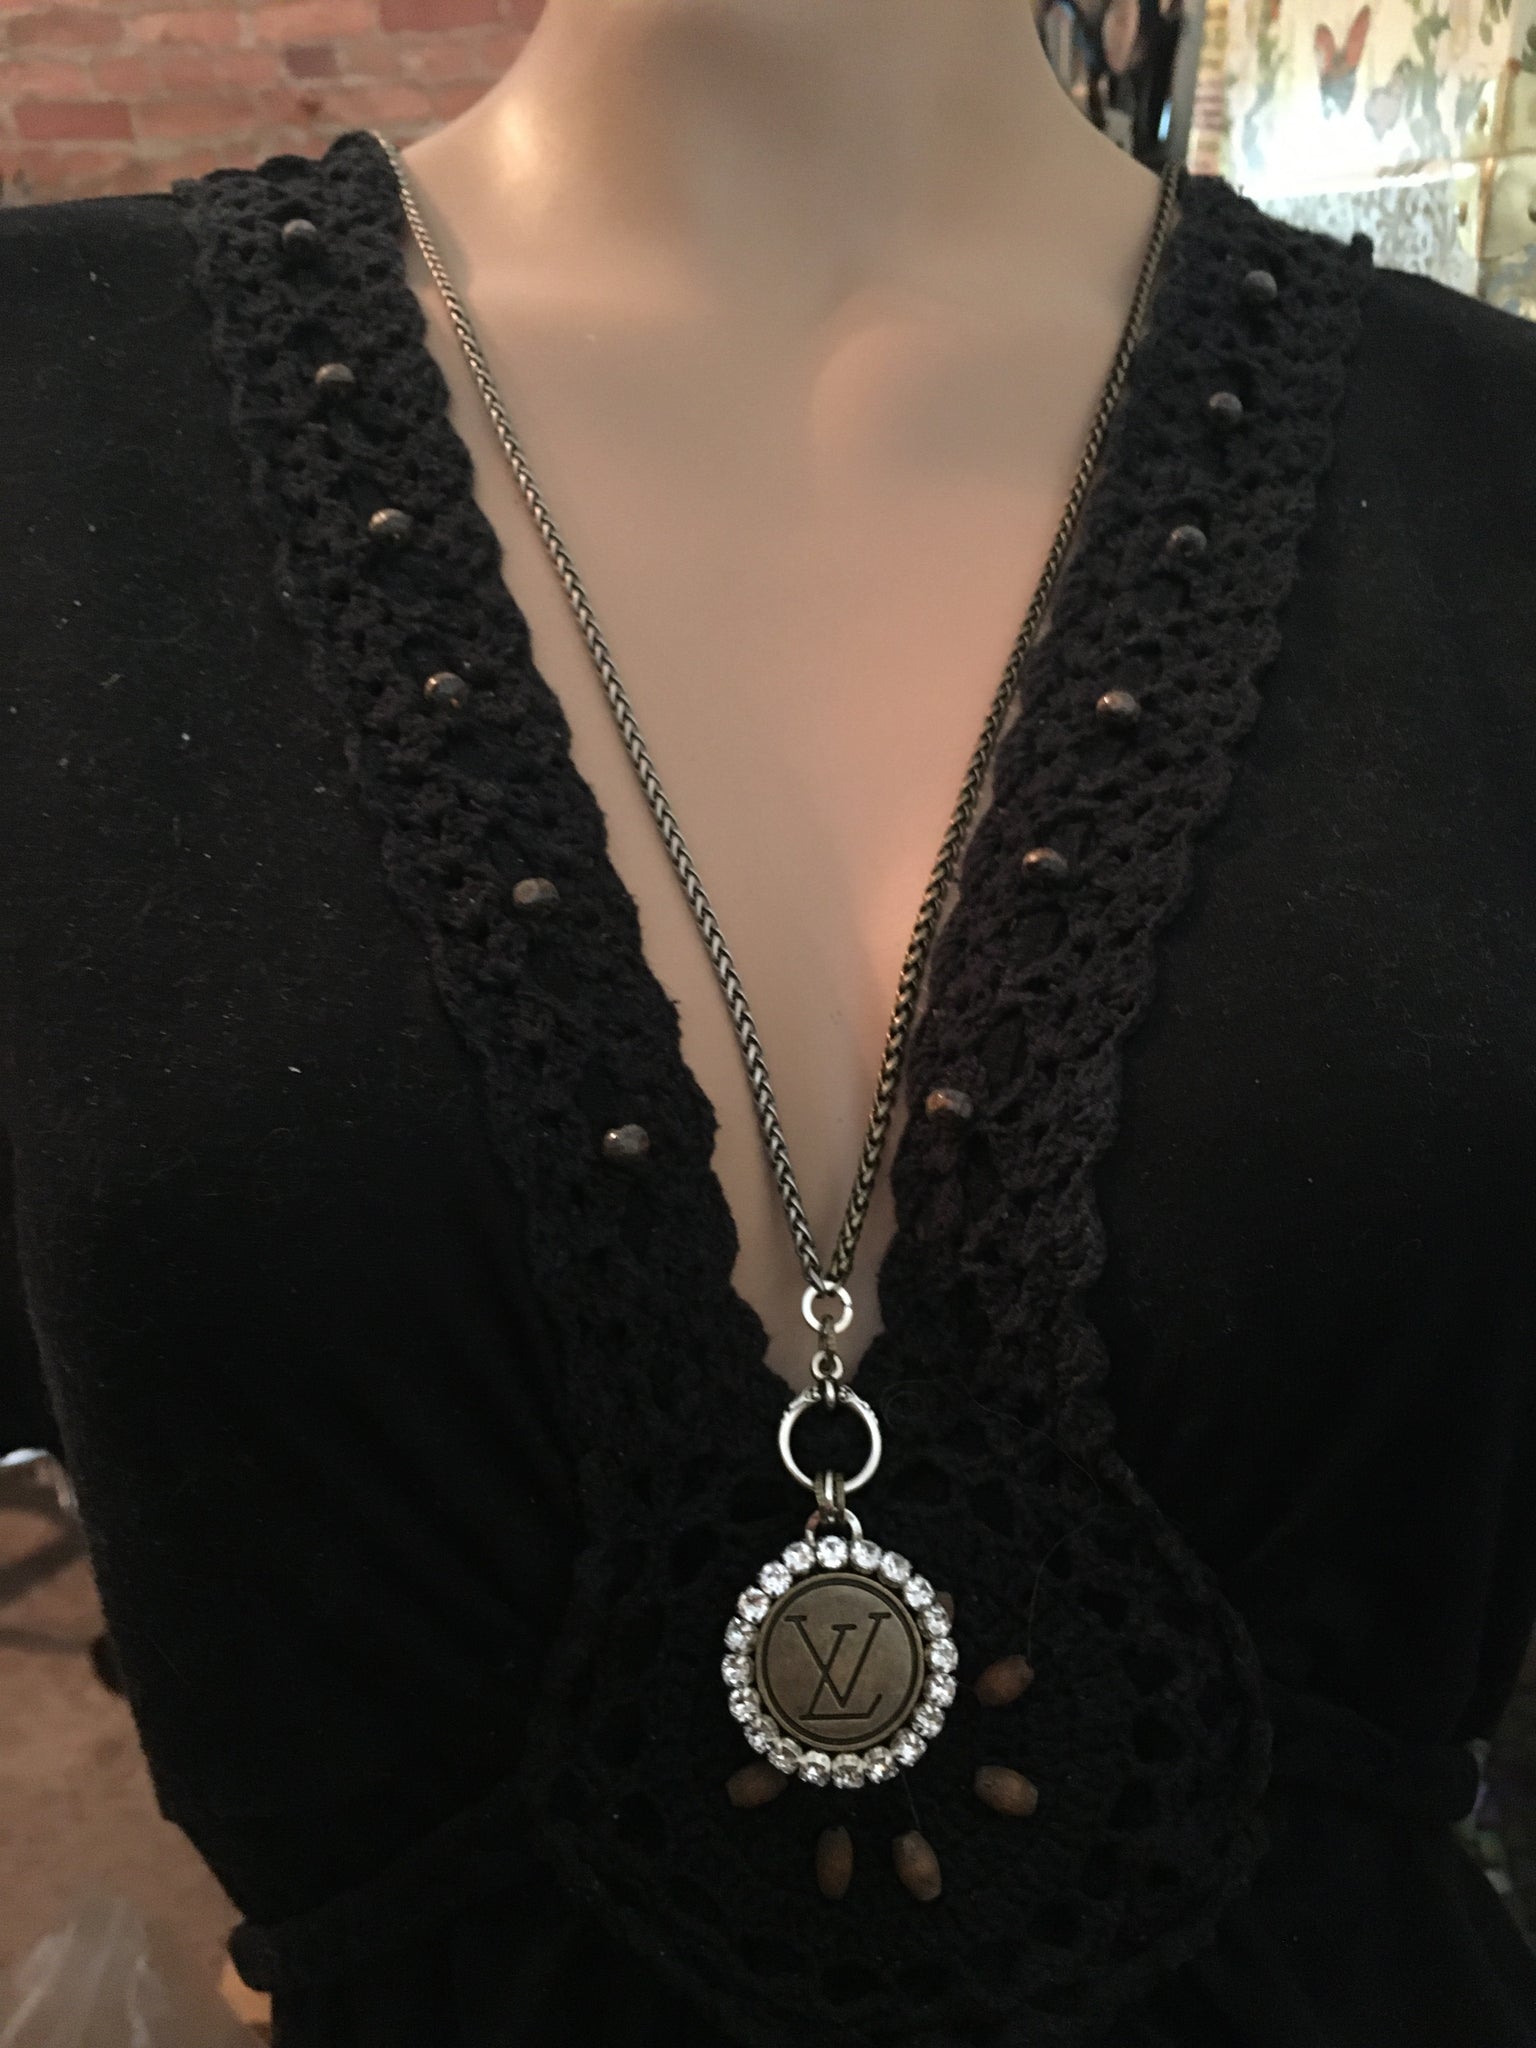 1” Louis Vuitton Button Necklace - Long or Short (Only 1 Left